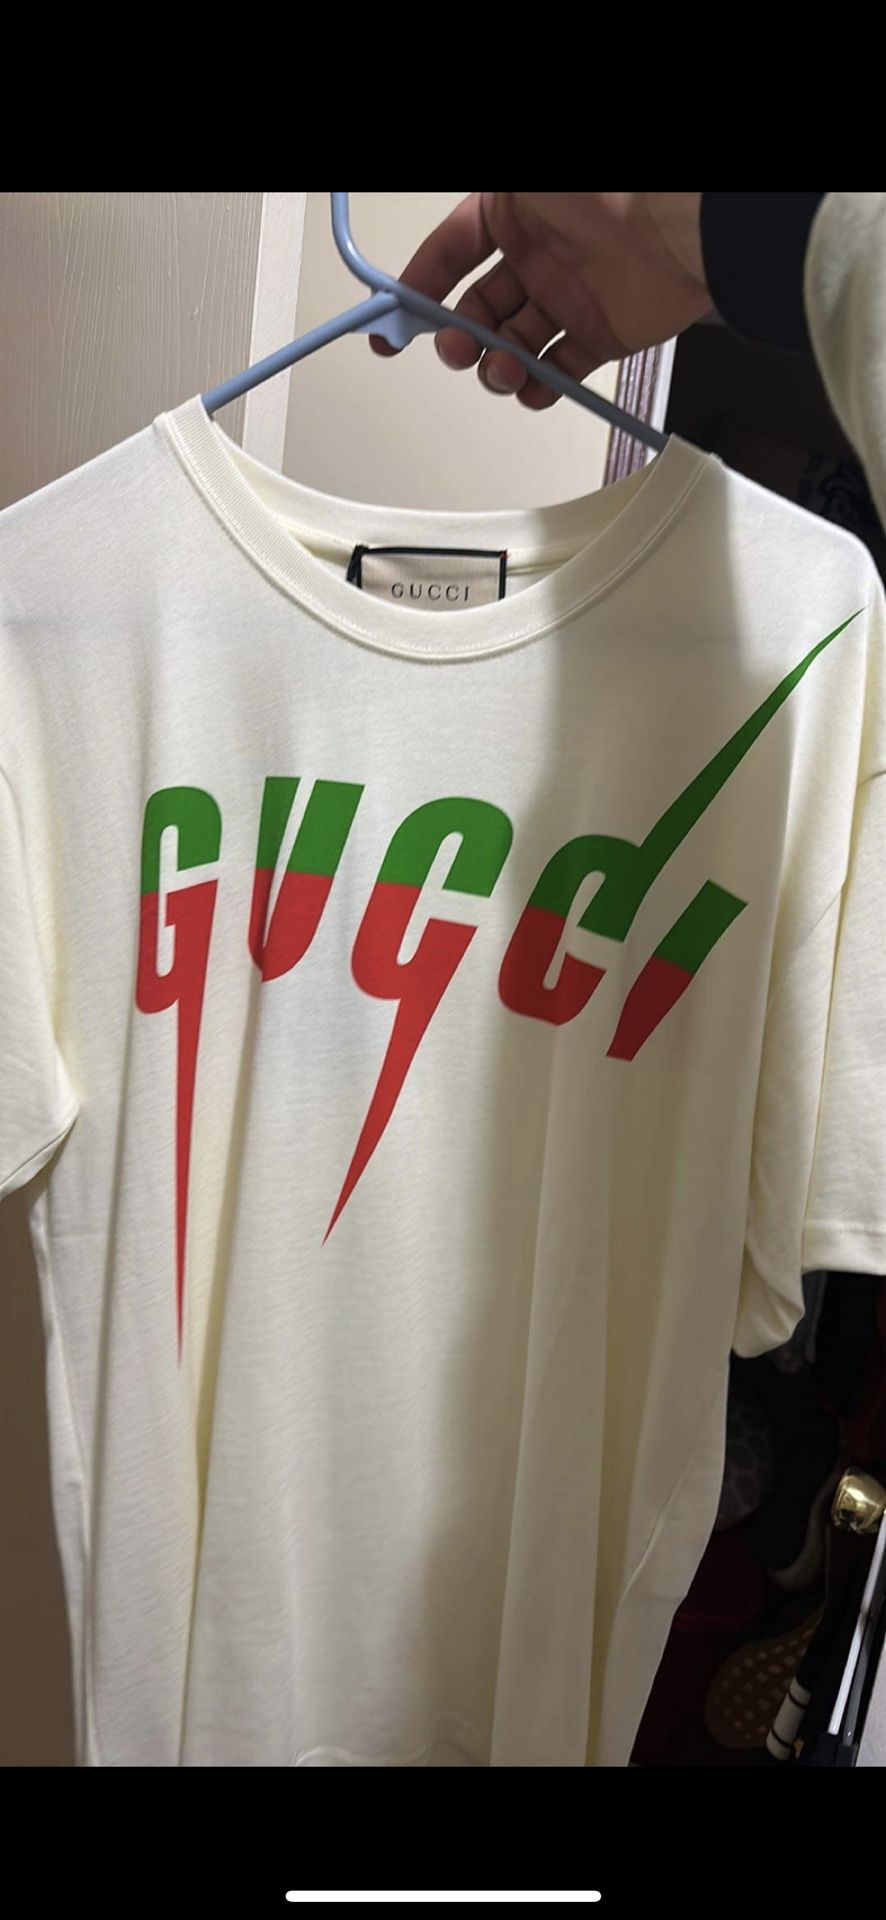 Gucci Blade Shirt Size Medium 